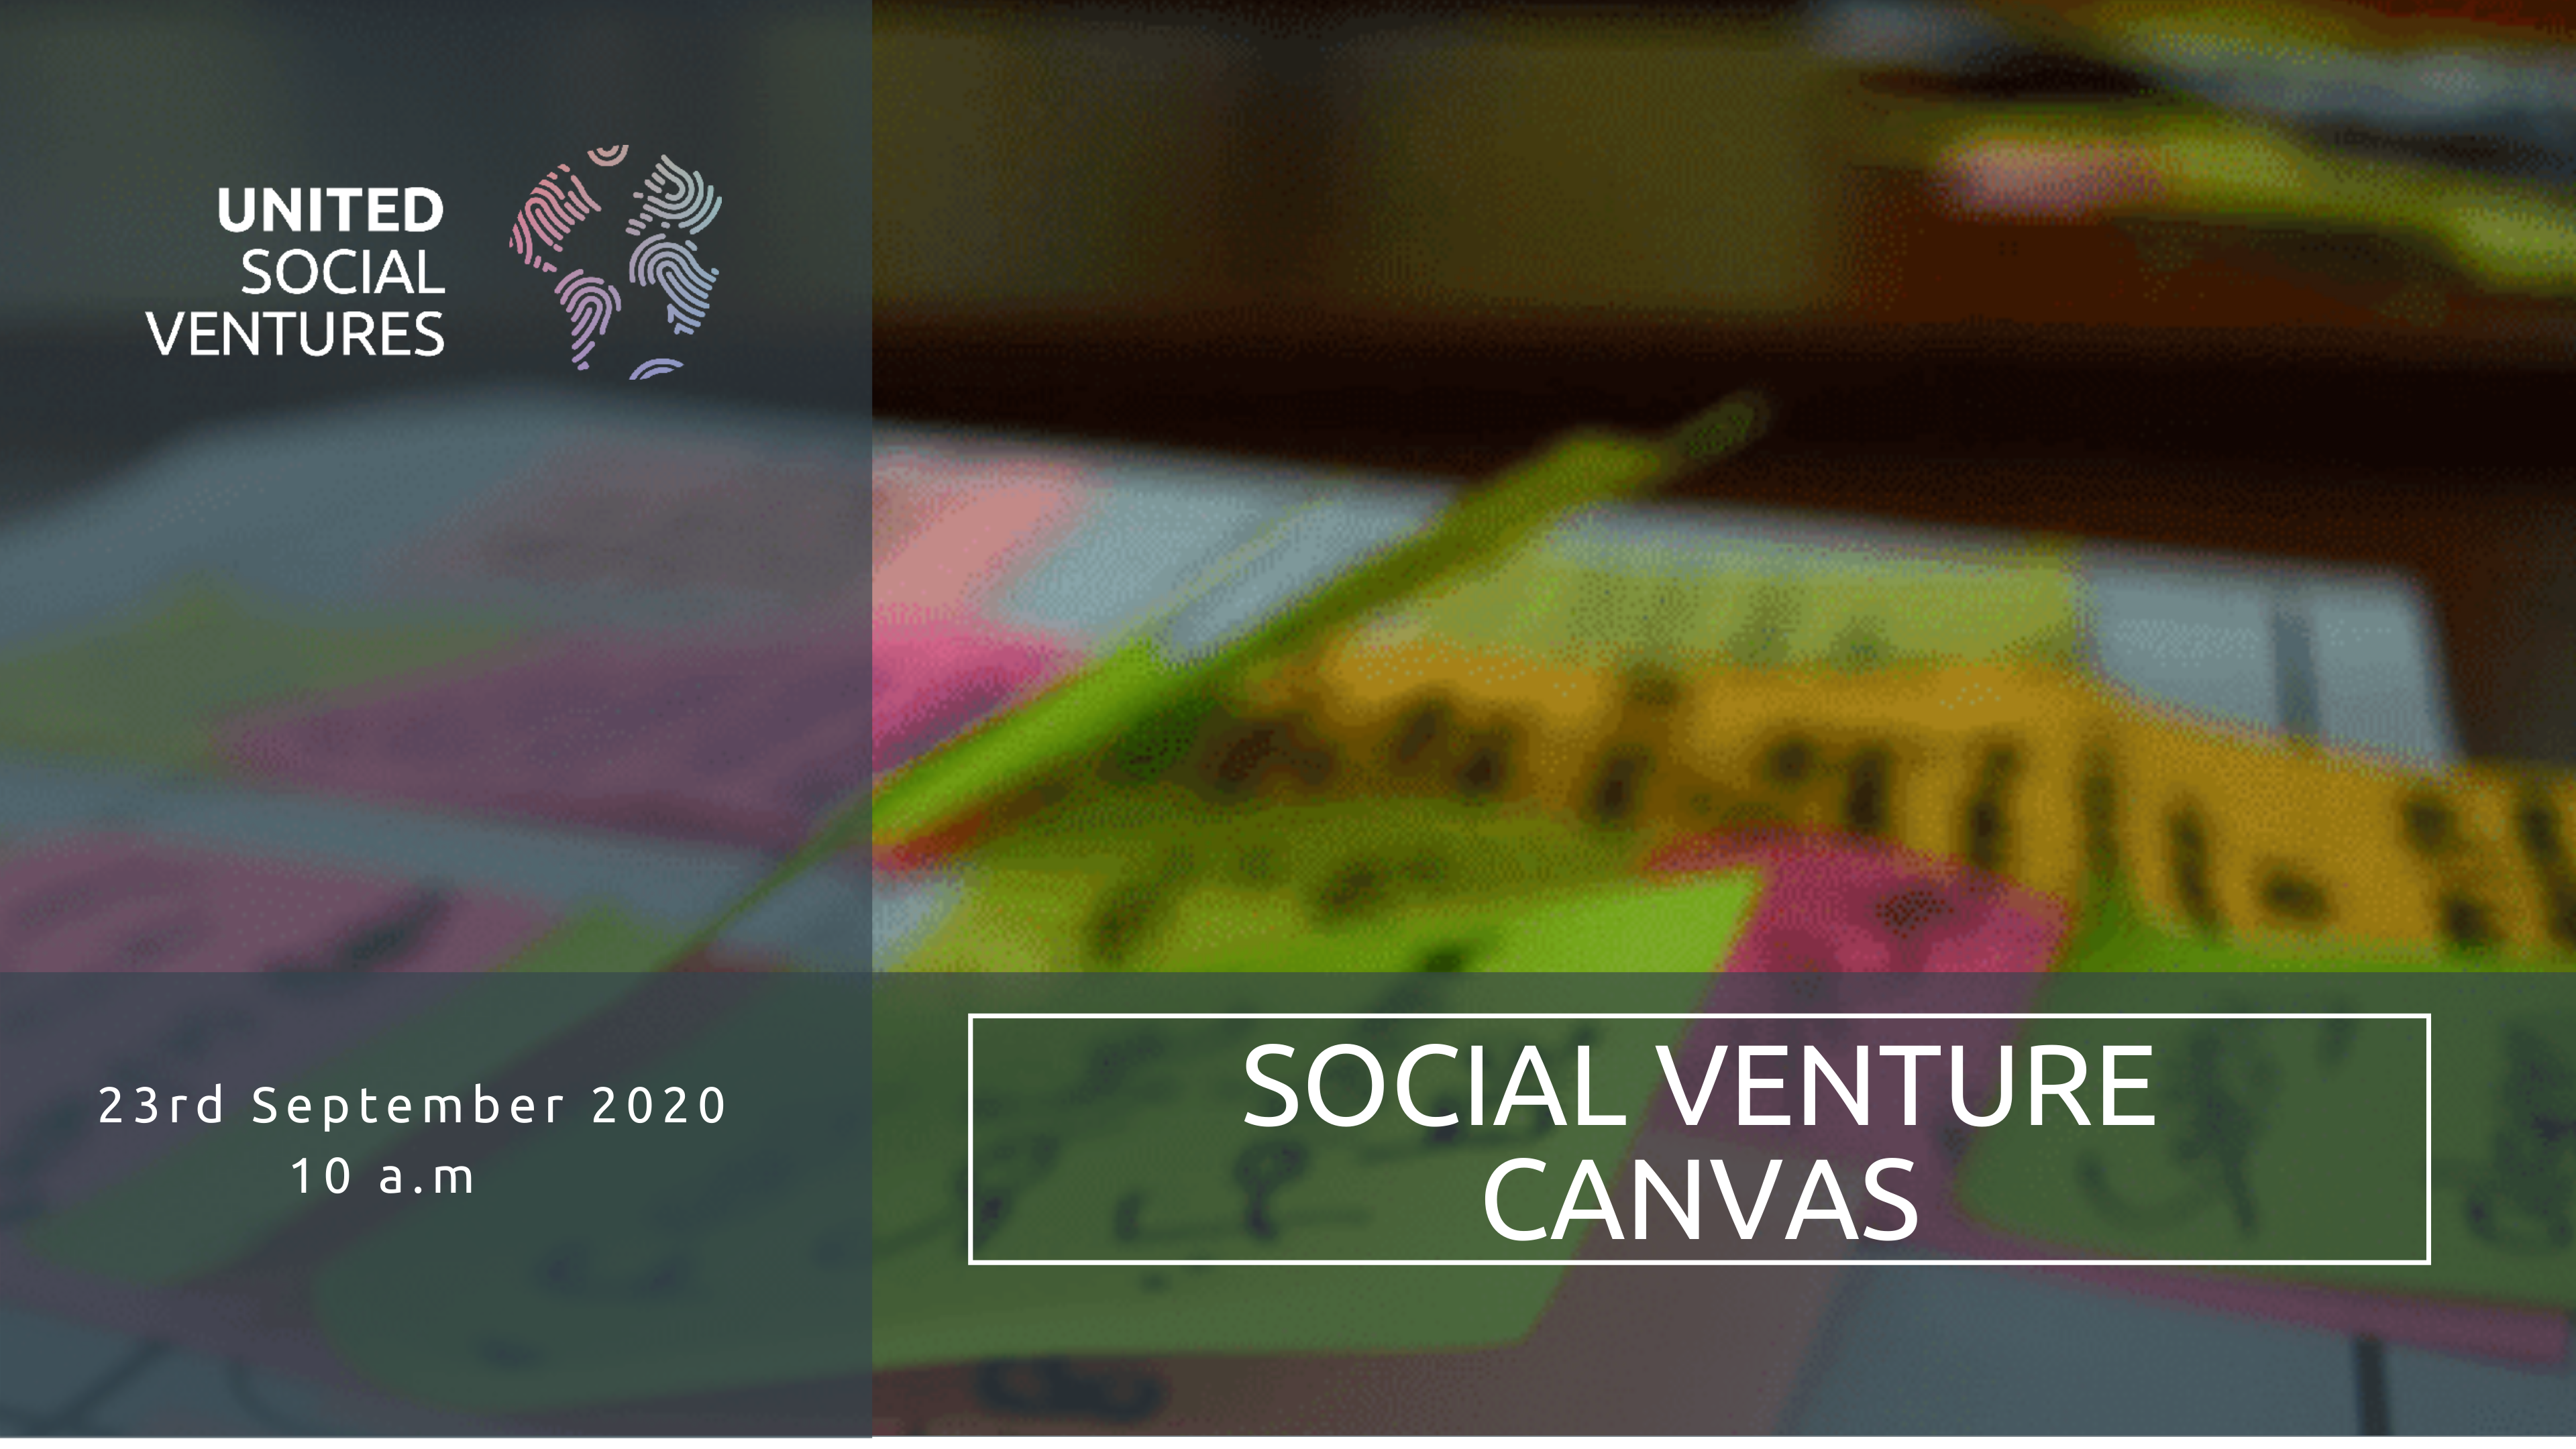 Social venture canvas (2)